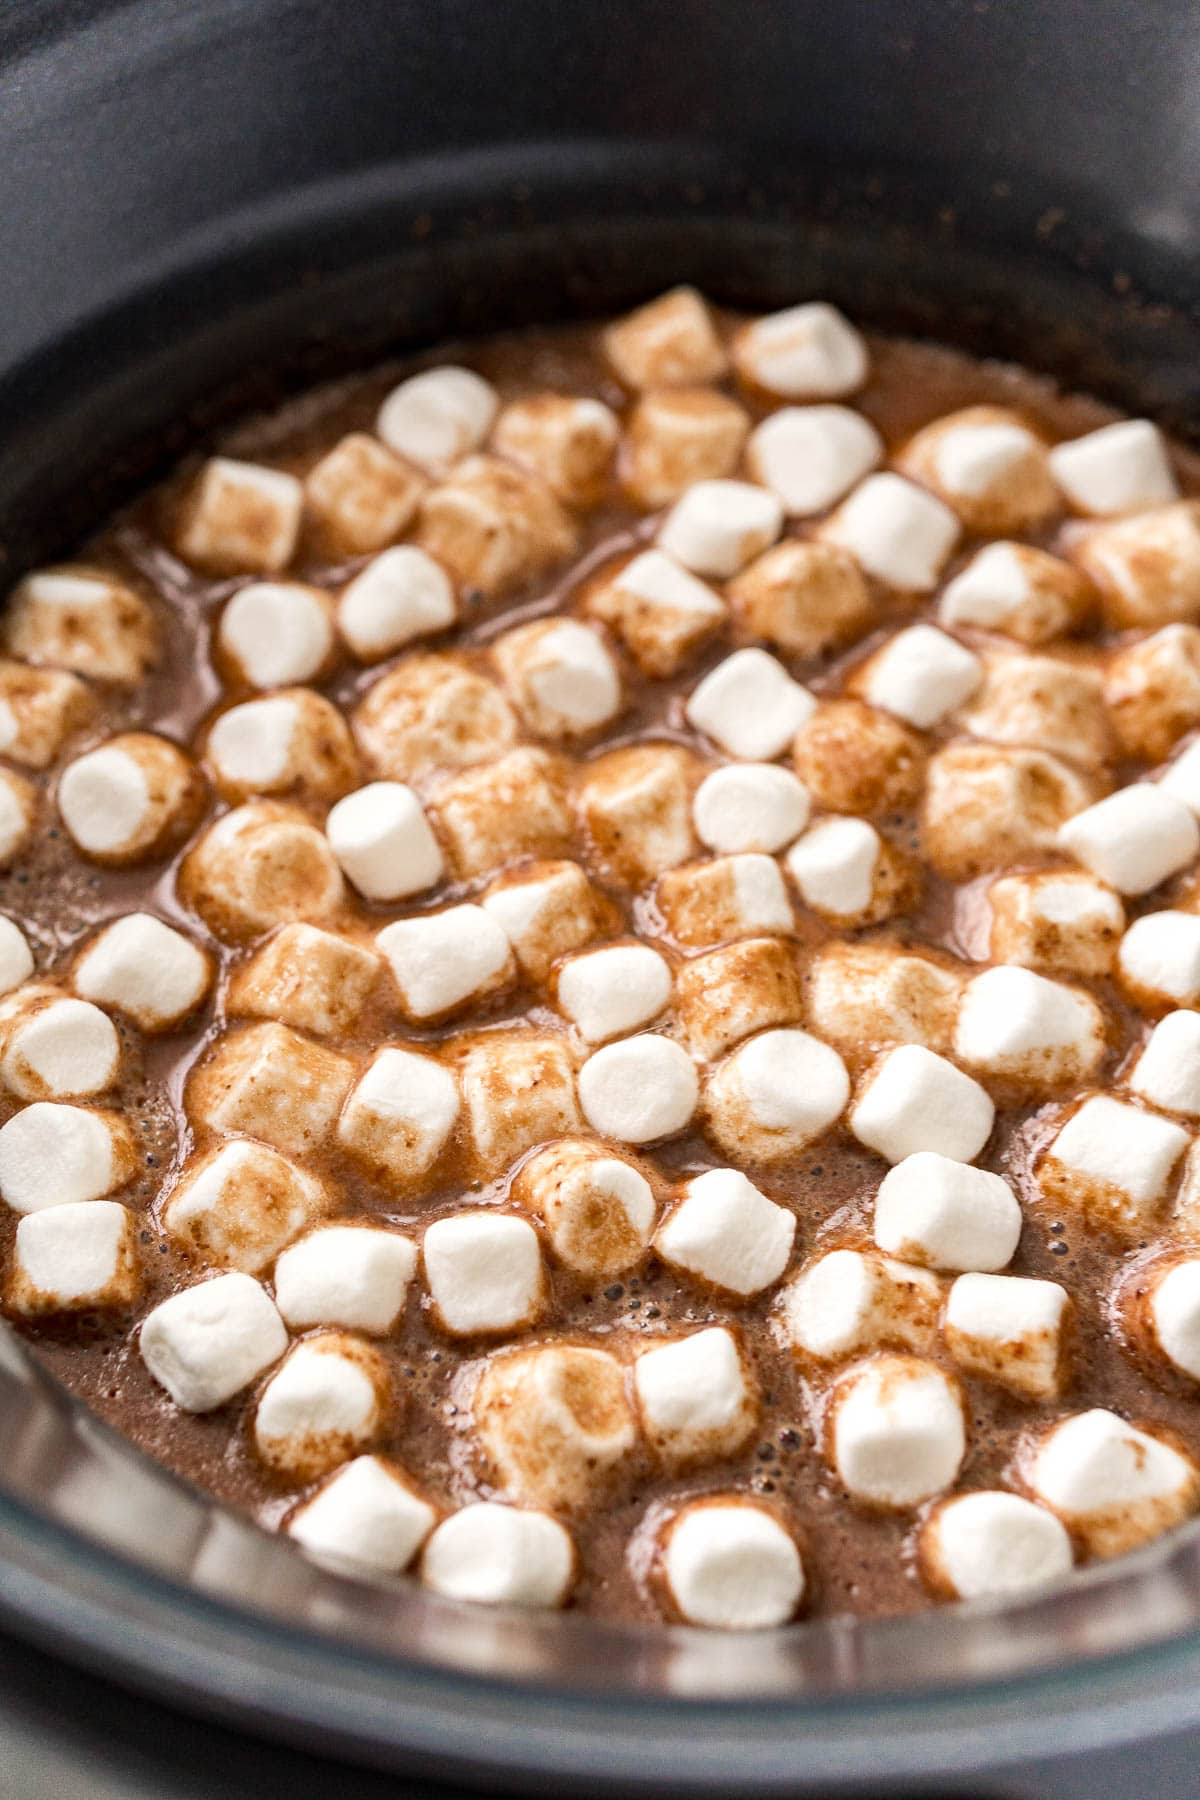 Mini marshmallows and hot chocolate in a crockpot.